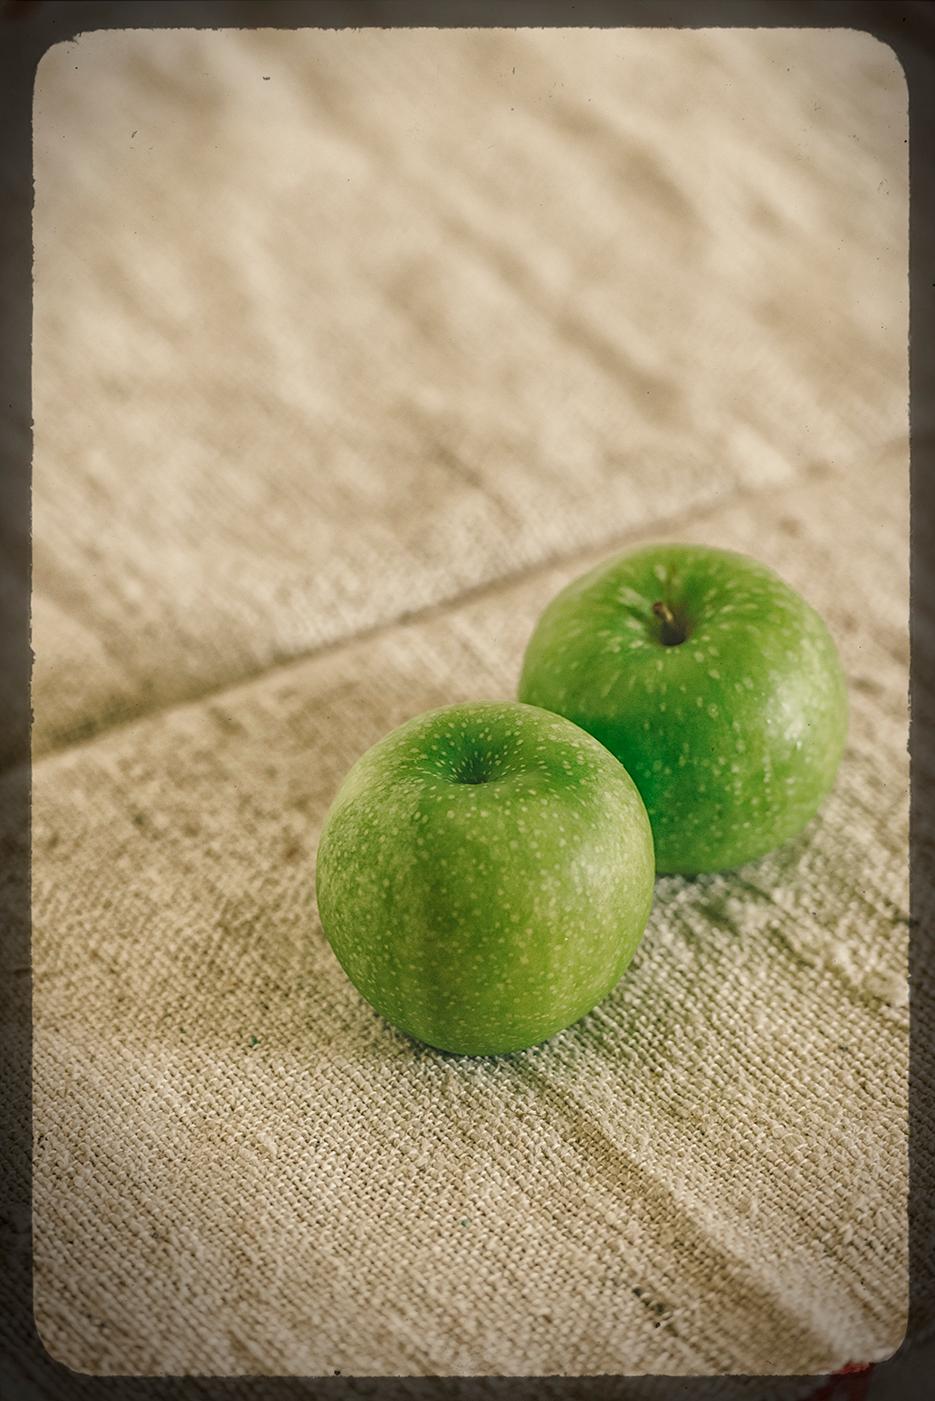 Apples. Food & fruit photography. Photography by professional Indian lifestyle photographer Naina Redhu of Naina.co